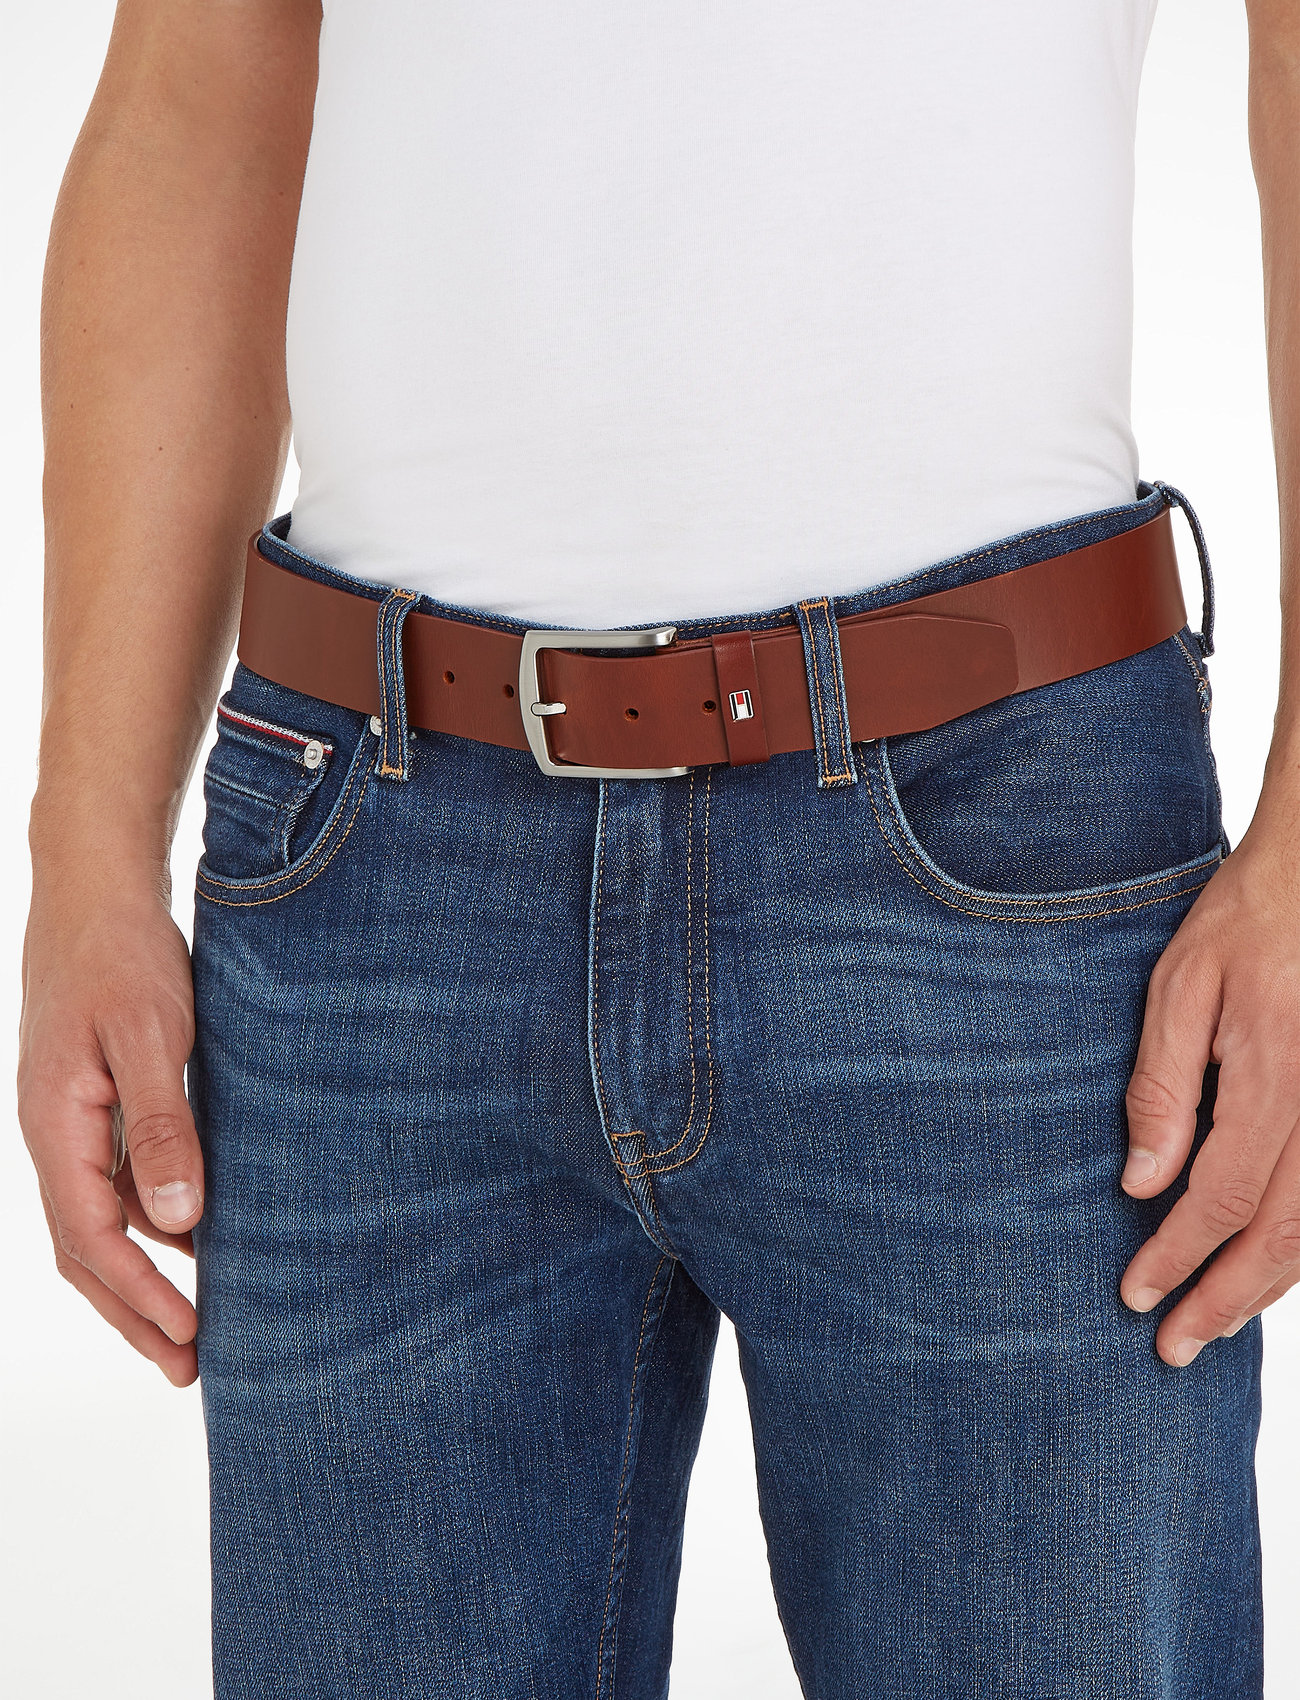 Tommy Hilfiger Denton Belt - Belts - Boozt.com